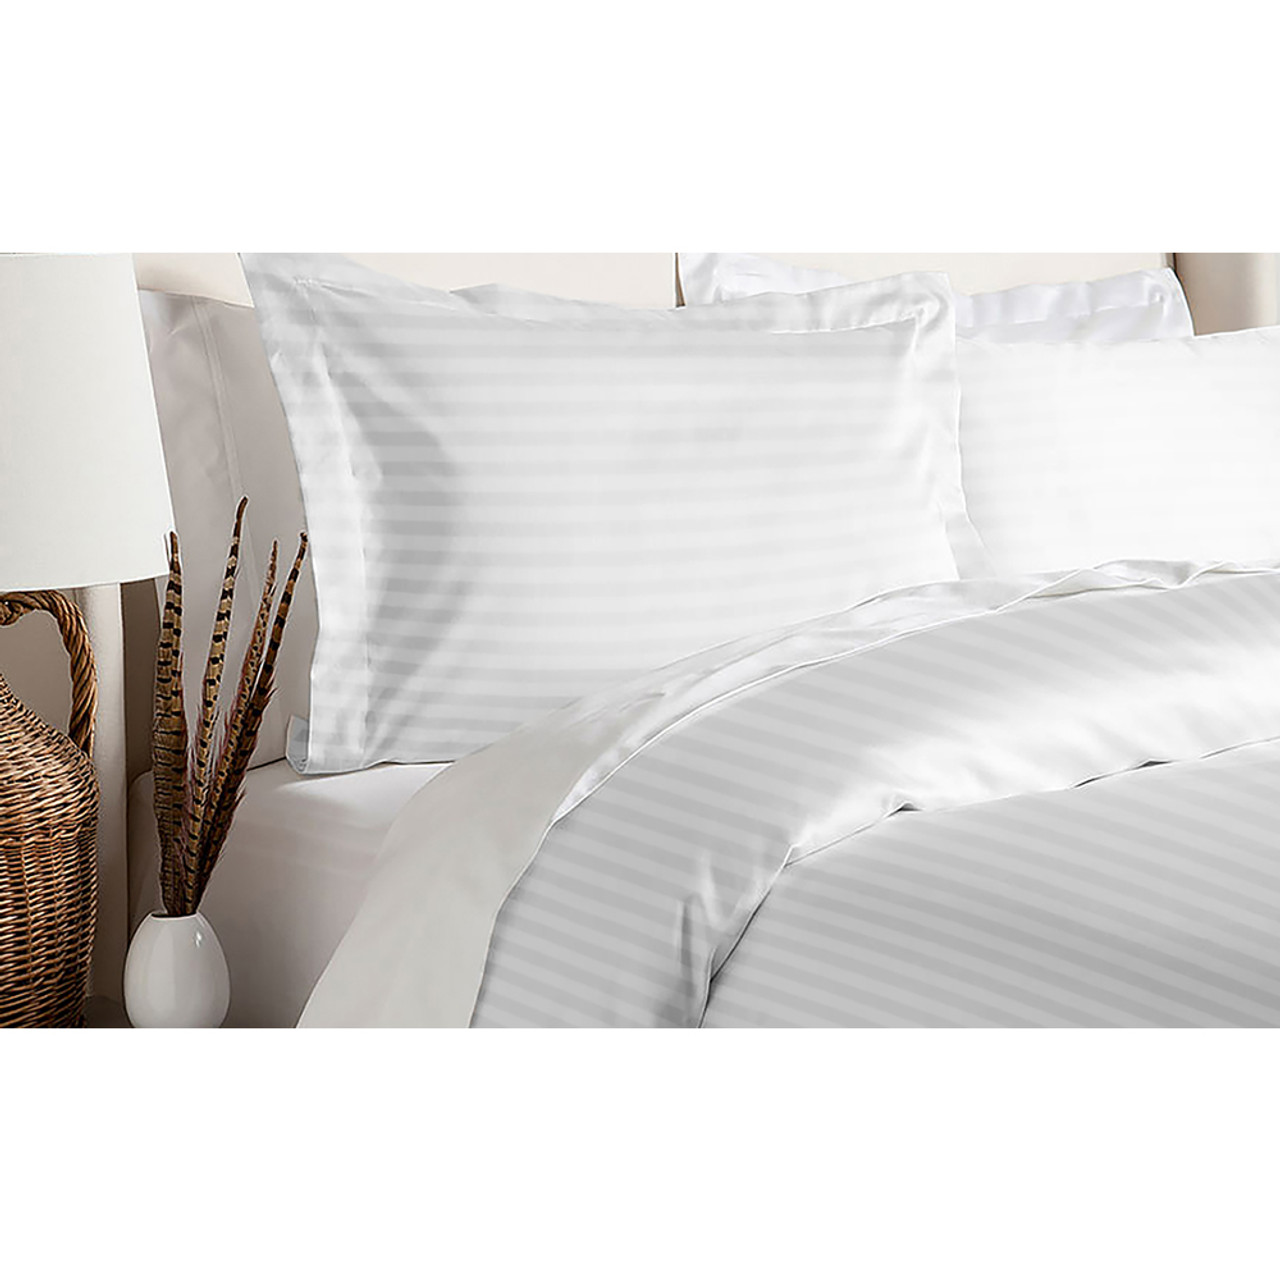 Kathy Ireland® White Down Fiber Comforter + Duvet Cover Set product image